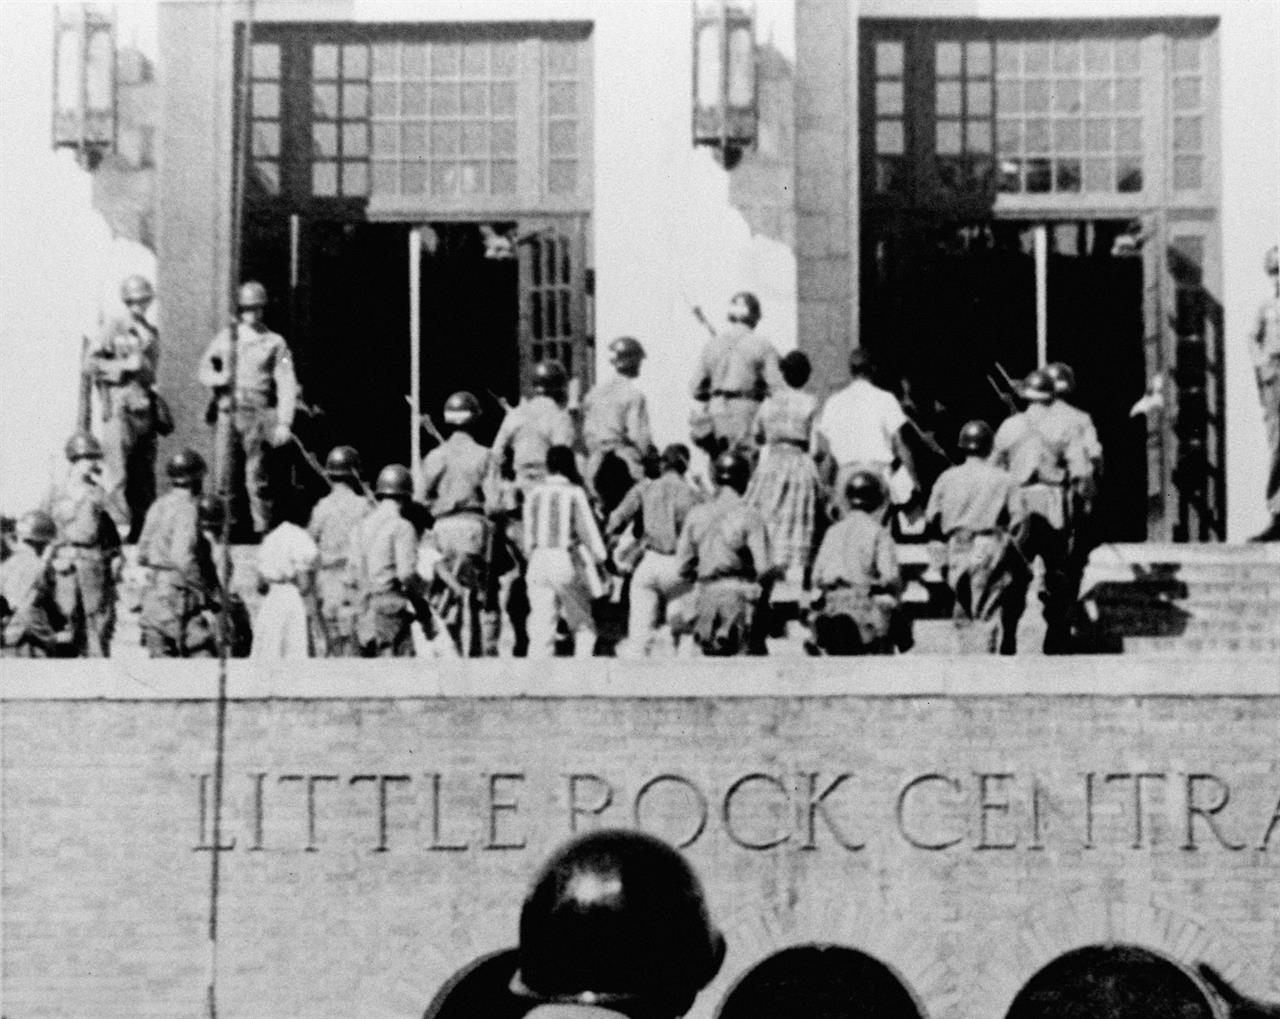 Segregation lingers in US schools 60 years after Little Rock AM 920